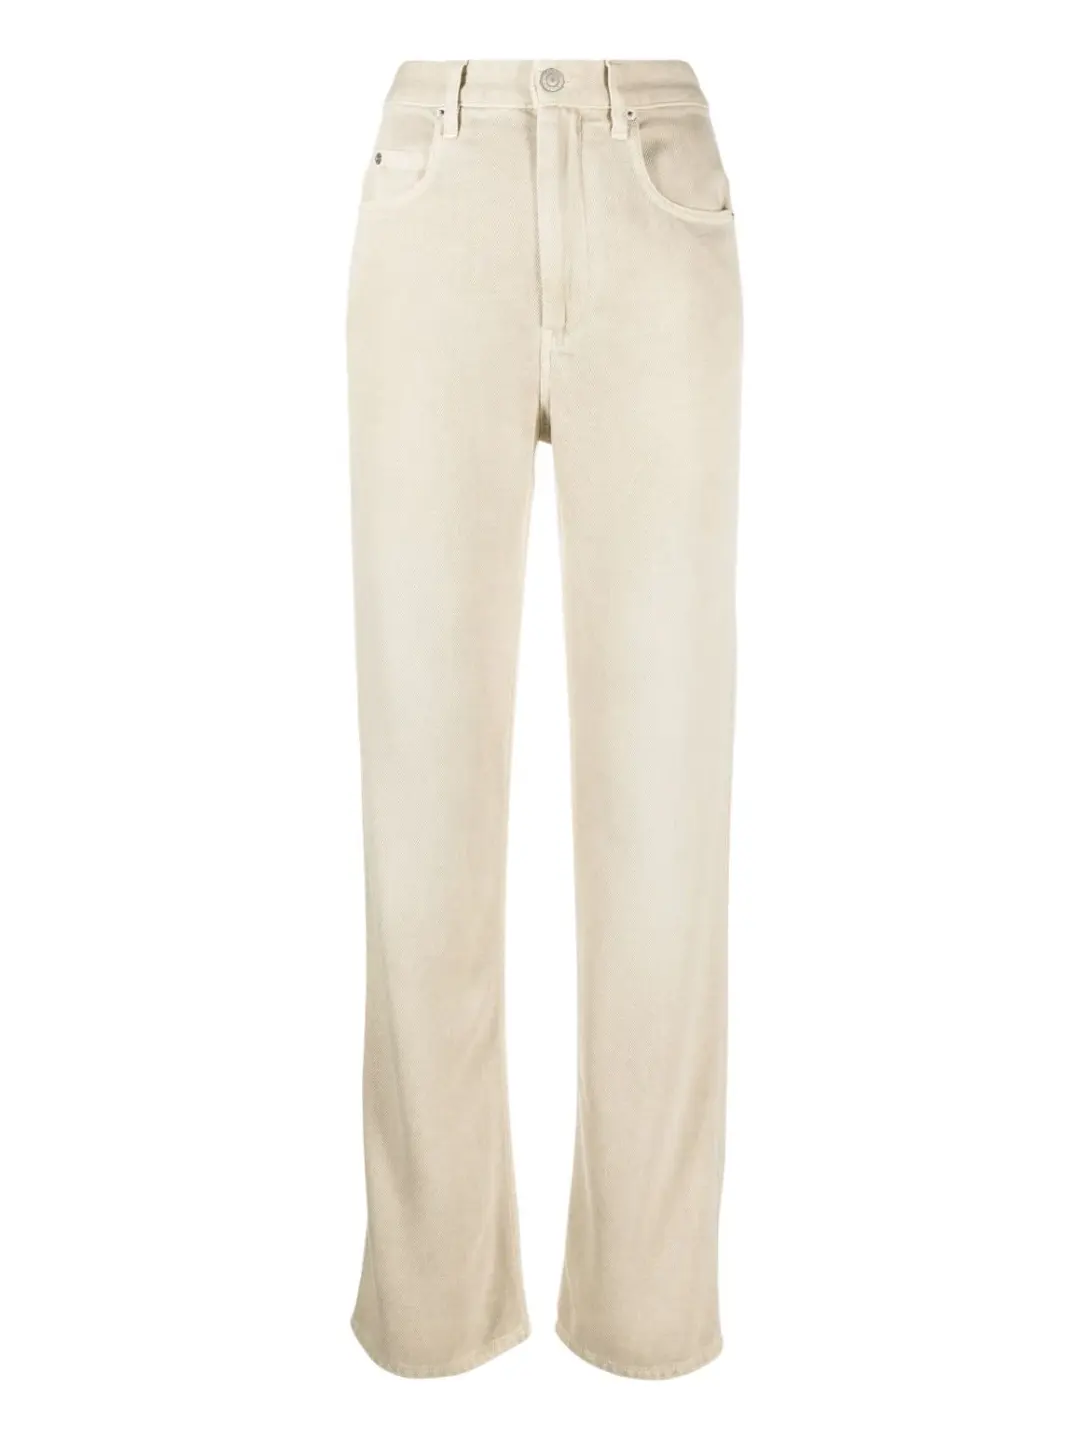 Marant Étoile: Belvira pants in ecru colour